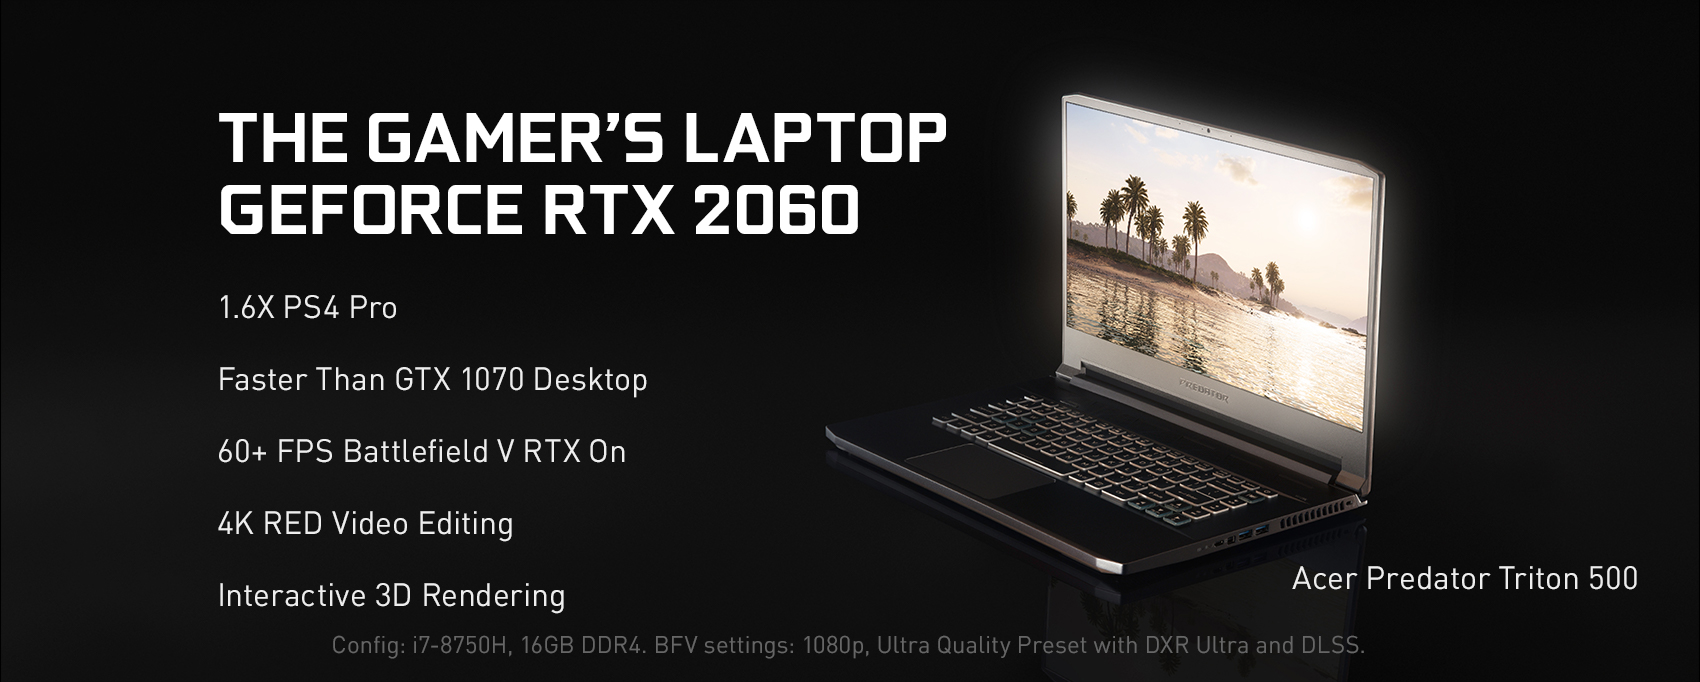 CES 2019: NVIDIA introduces GeForce RTX Laptops geforce-rtx-2060-laptops-850@2x-final-version.jpg